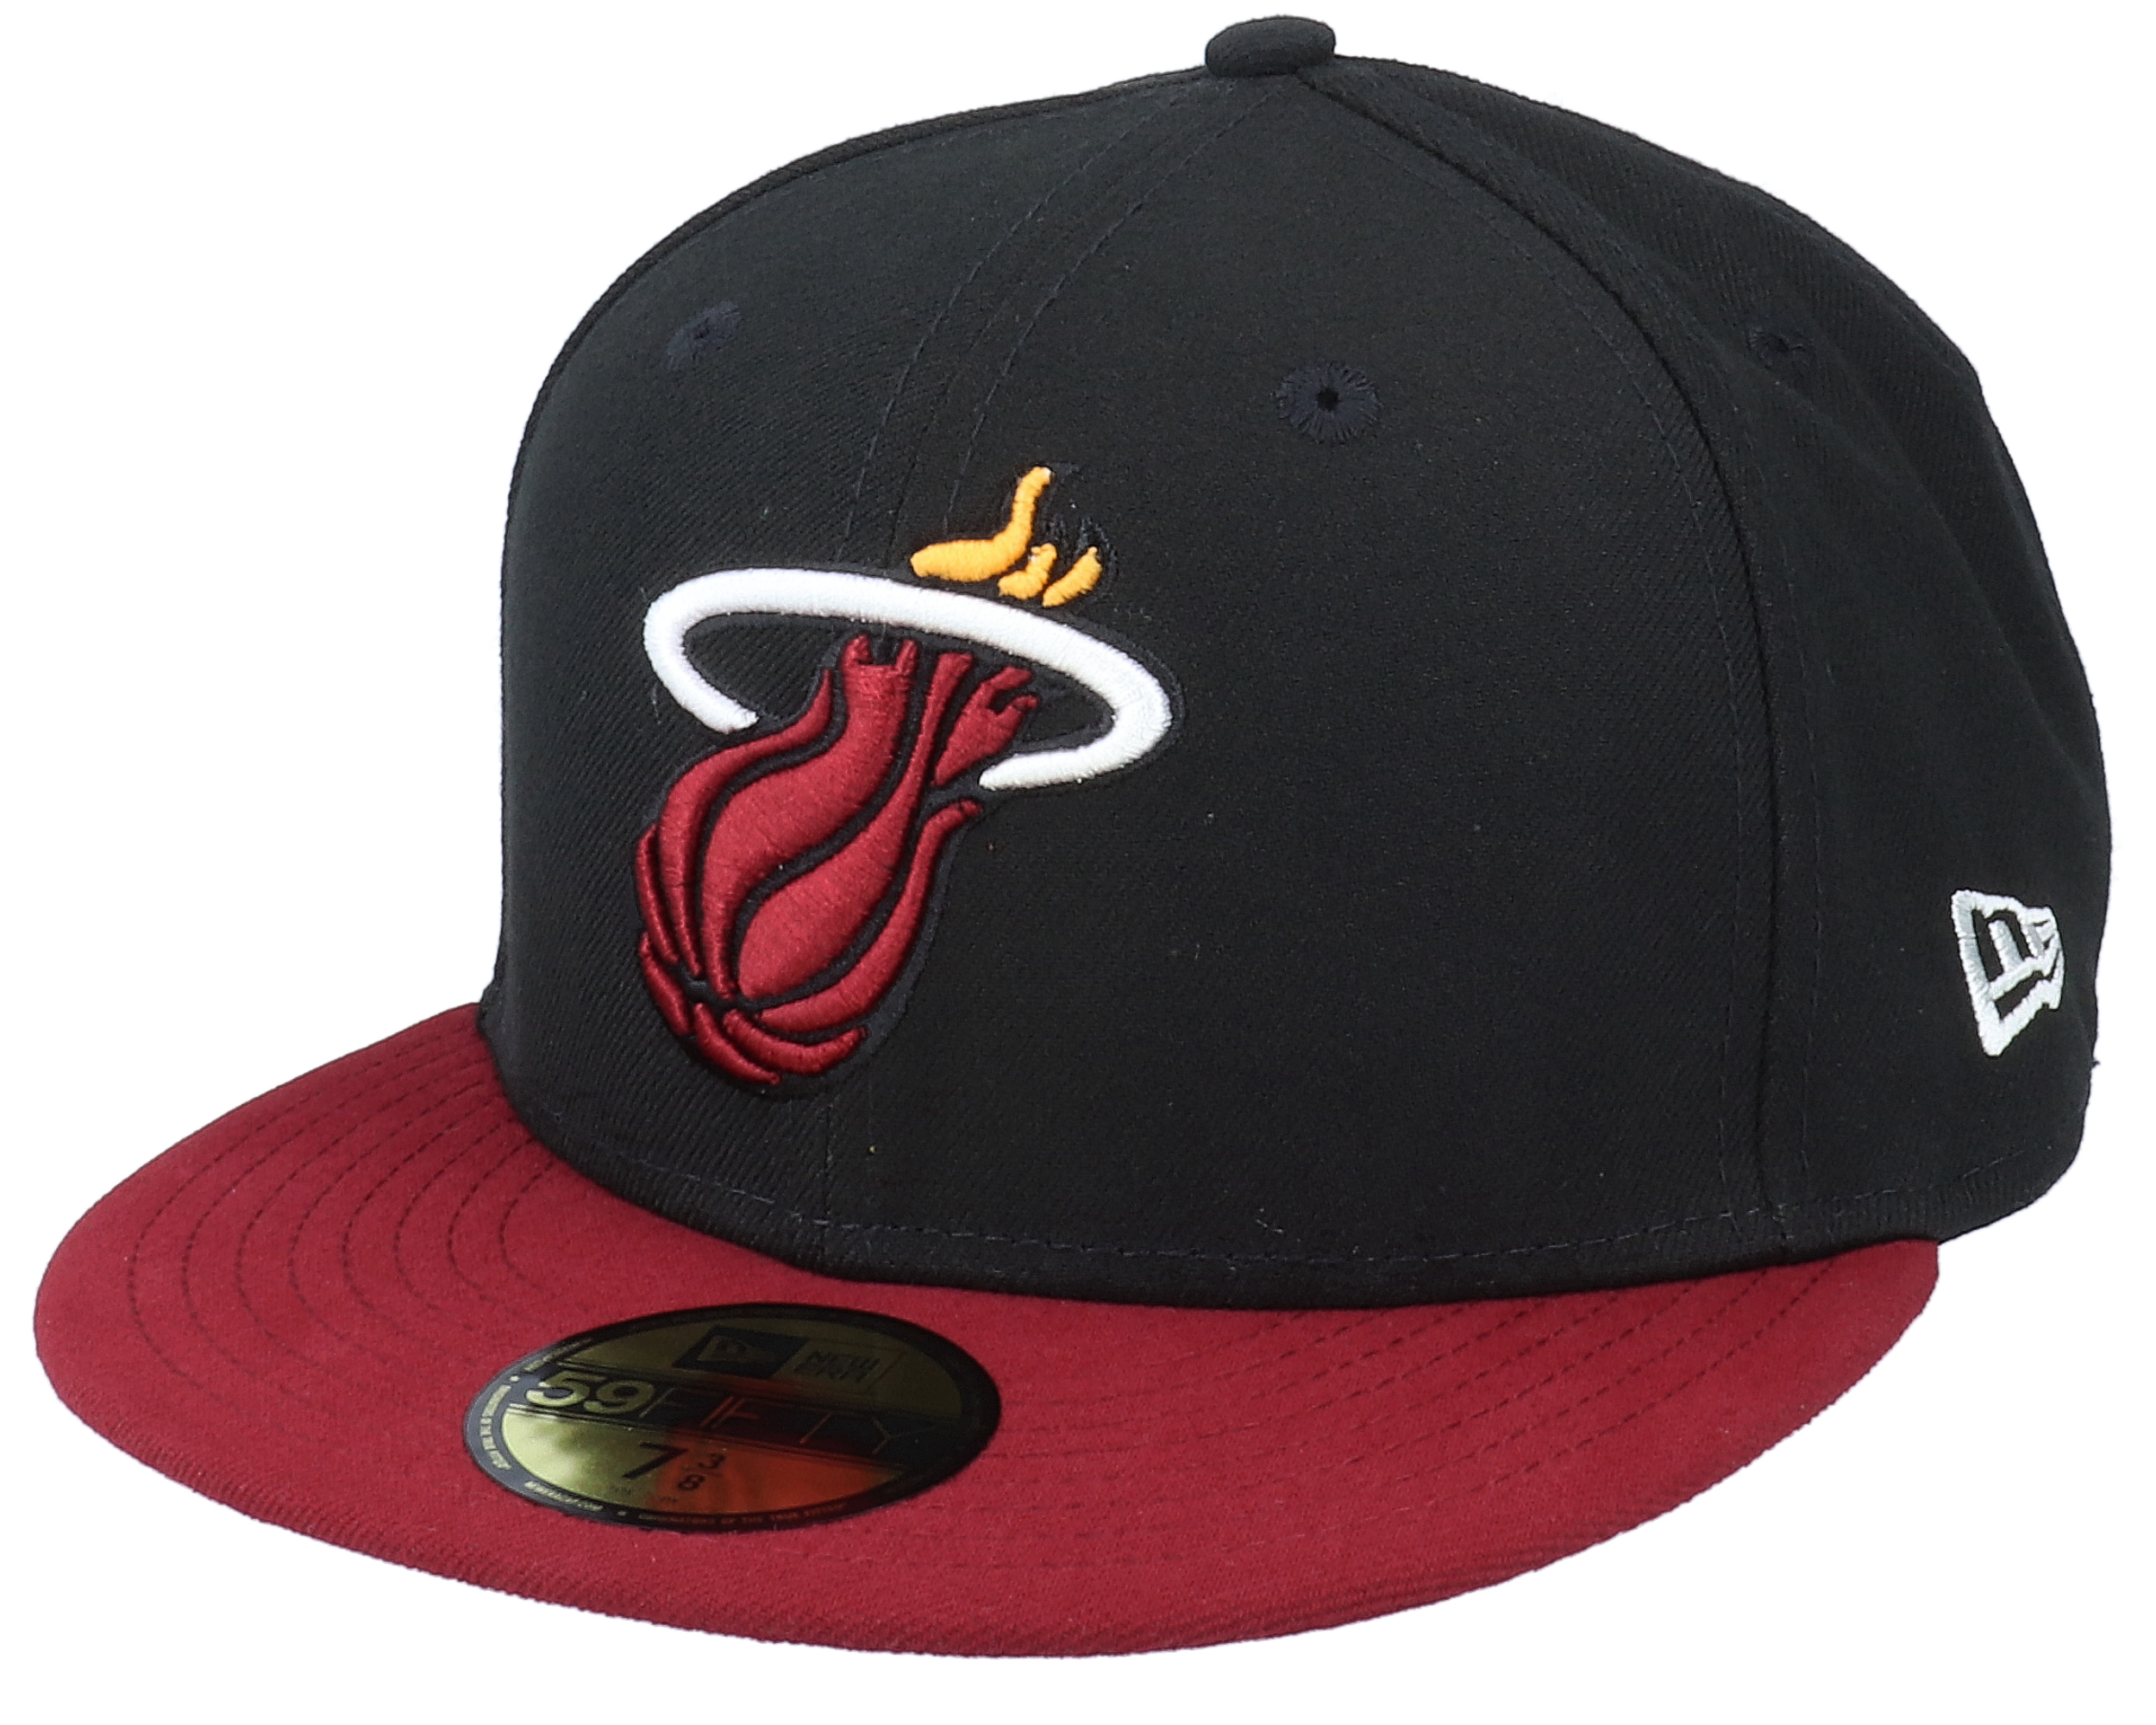 Miami Heat NBA Basic 59Fifty Black/Maroon Fitted - New Era caps ...